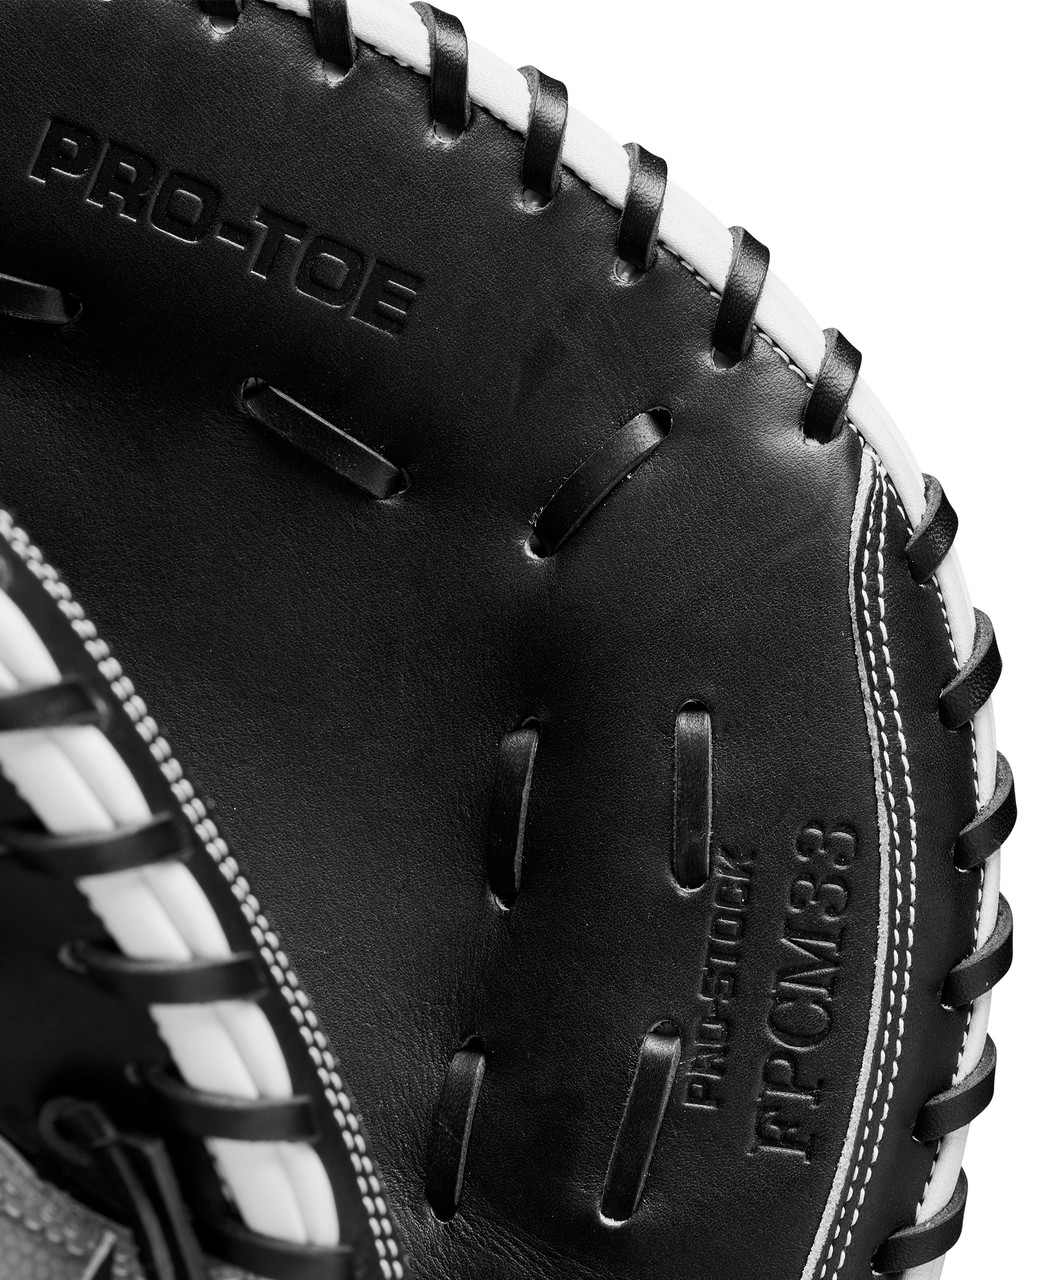 Wilson A9880 Pro-Toe Grip-Tite Pocket 12 Softball Catcher's Mitt Glove RHT